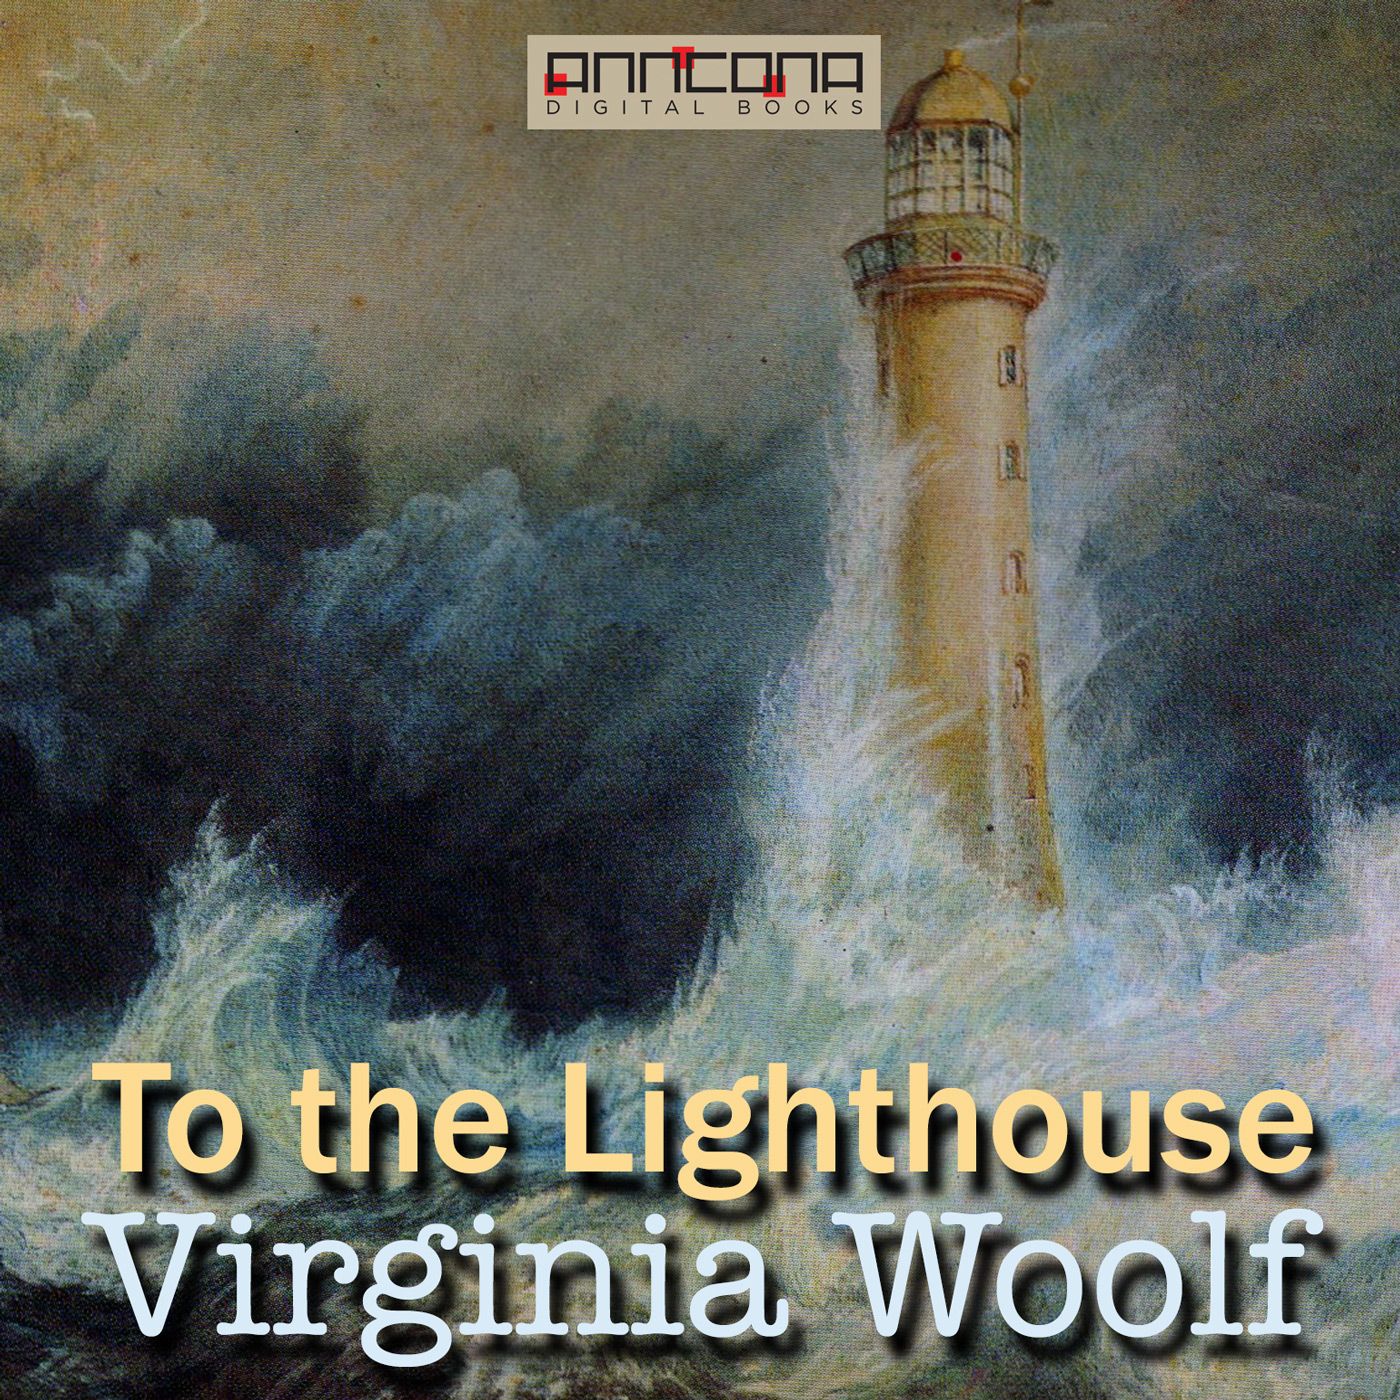 To the Lighthouse, ljudbok av Virginia Woolf